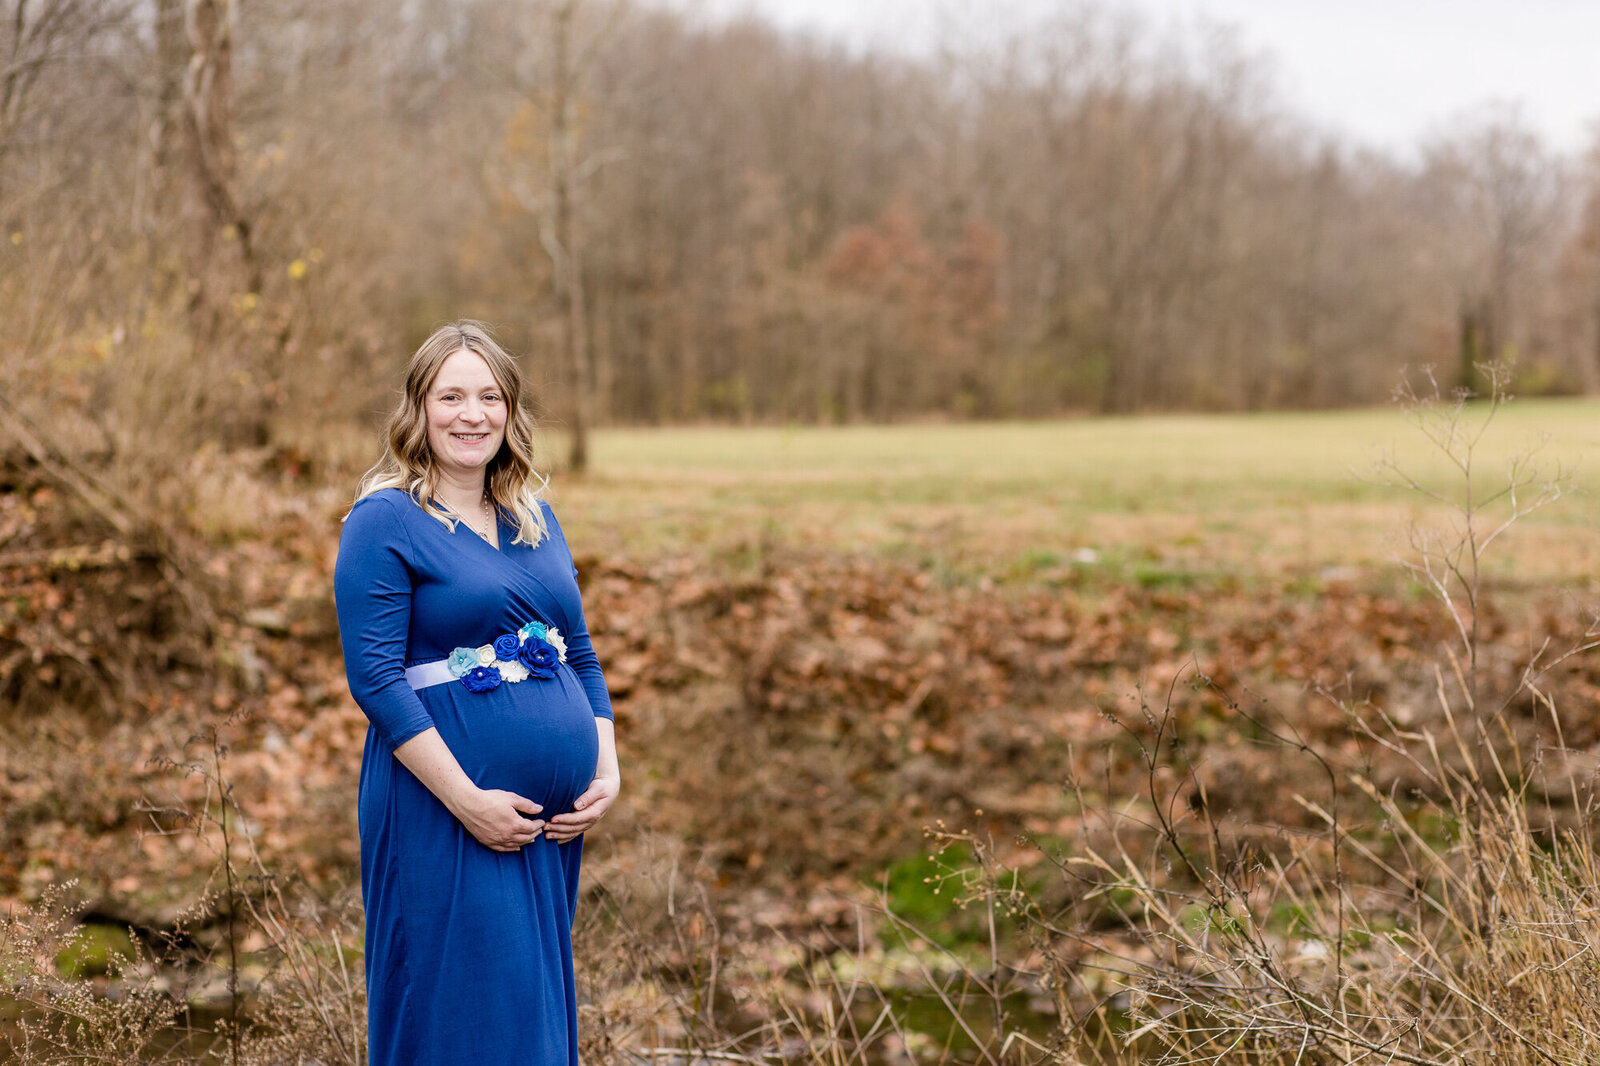 Outdoor-maternity-photography-session-Lexington-KY-photographer-baby-boy-4